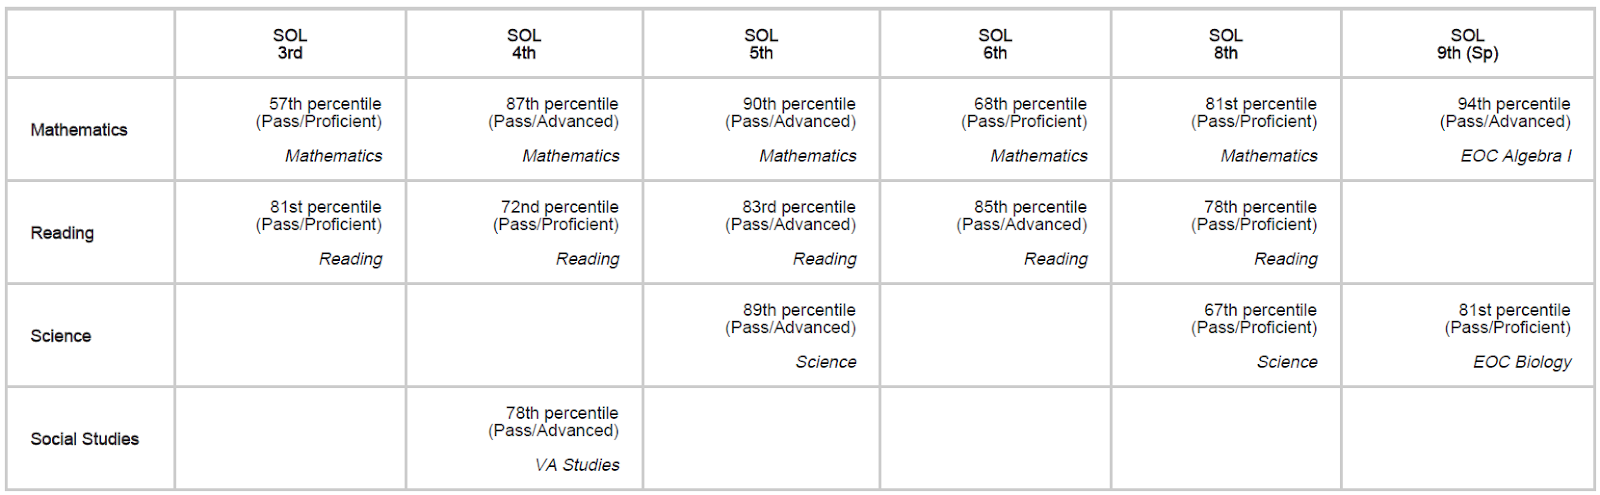 SOL Scores by Grades